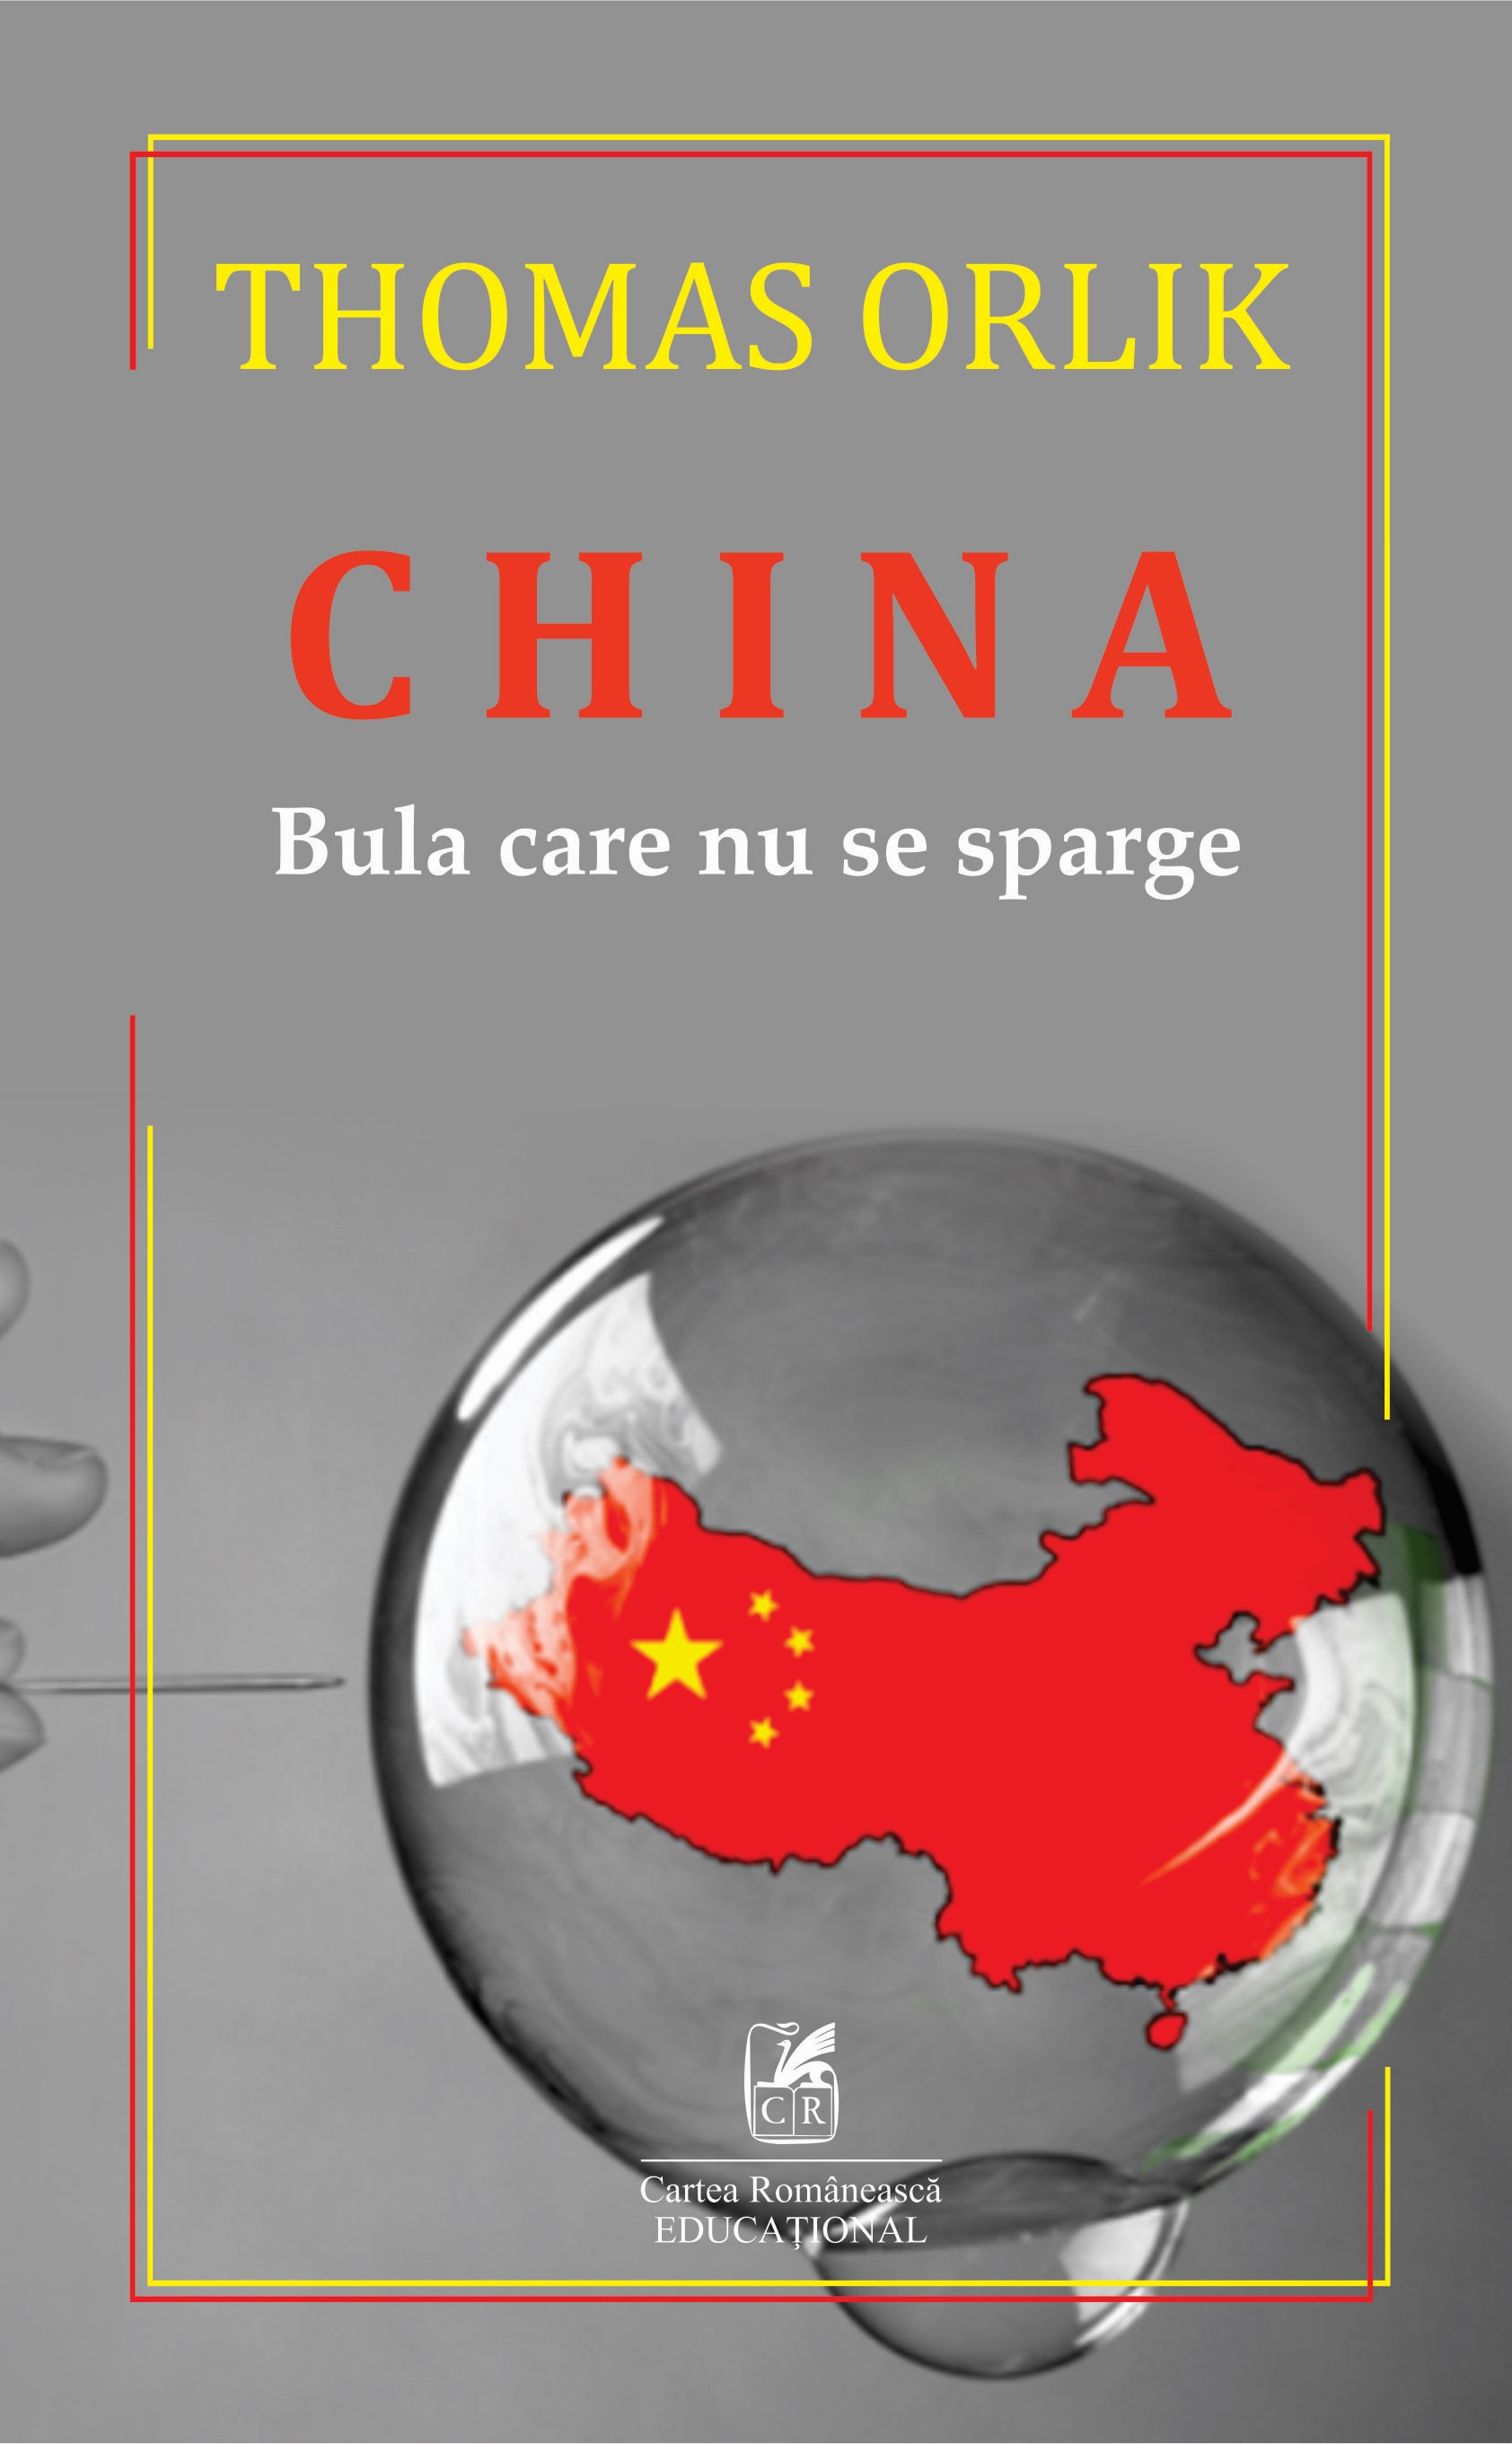 China | Thomas Orlik Cartea Romaneasca educational